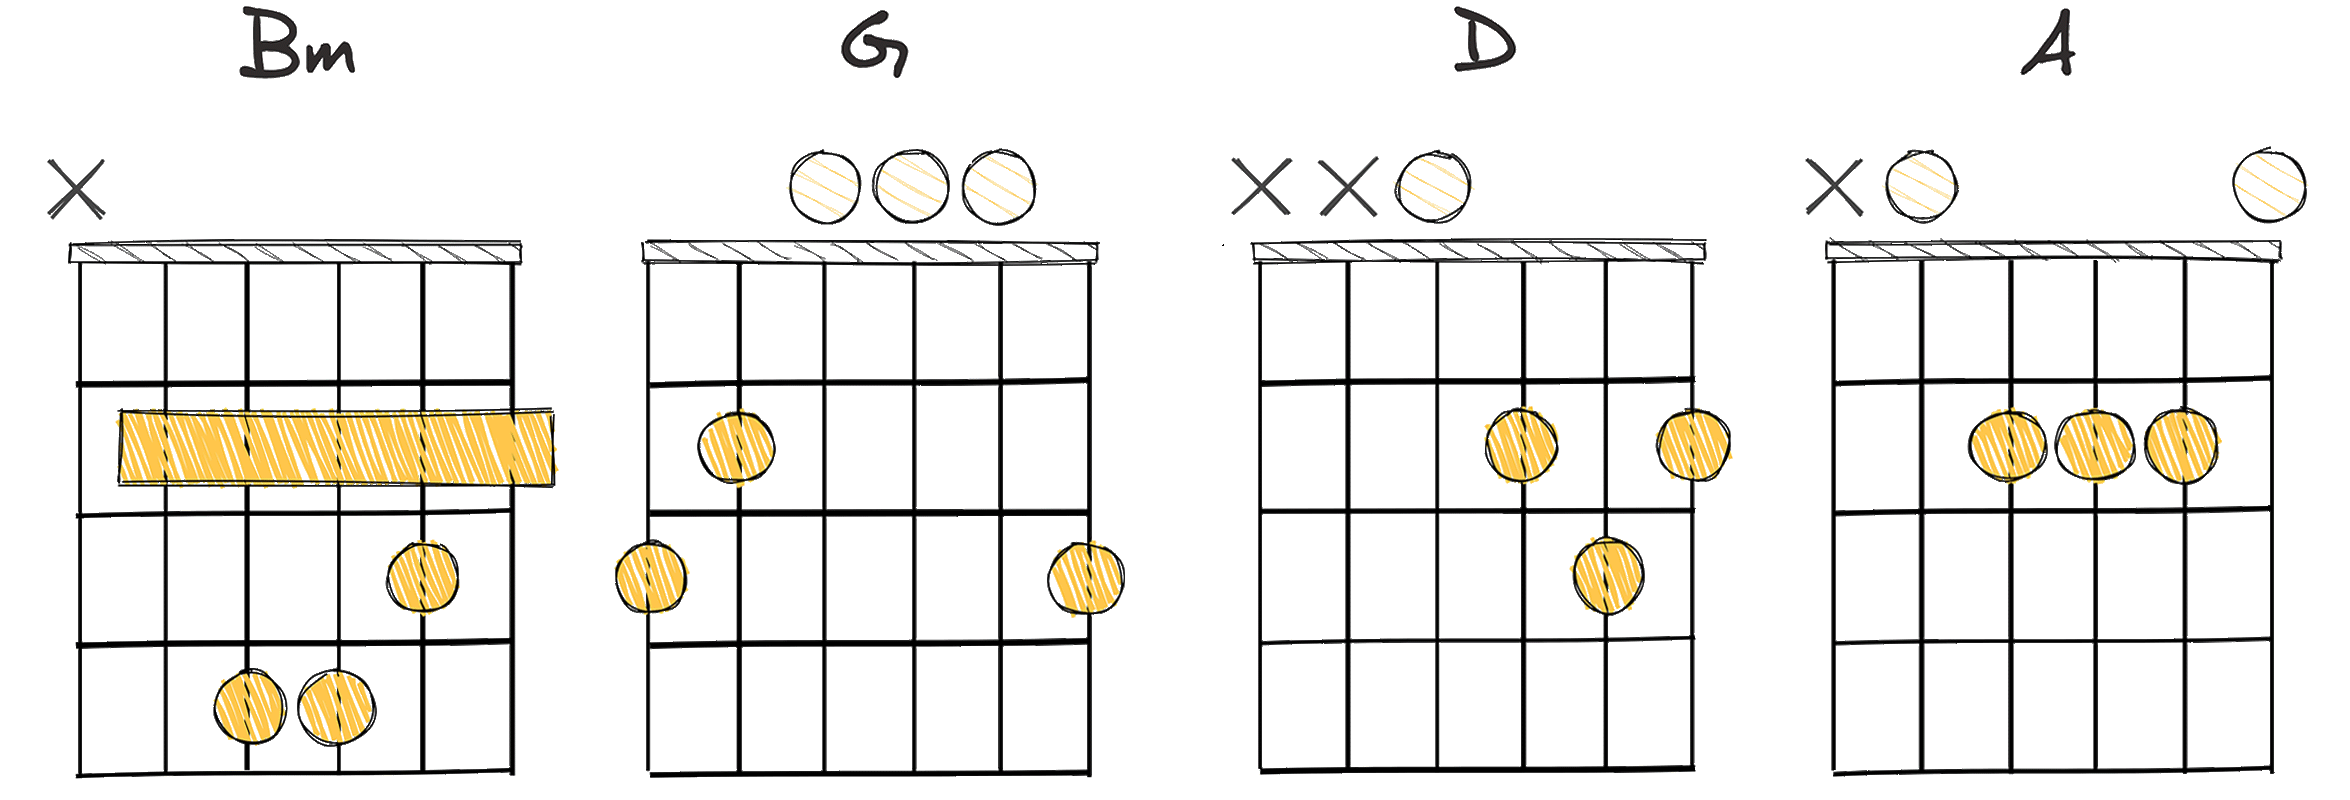 vi-IV-I-V (6-4-1-5) chords diagram